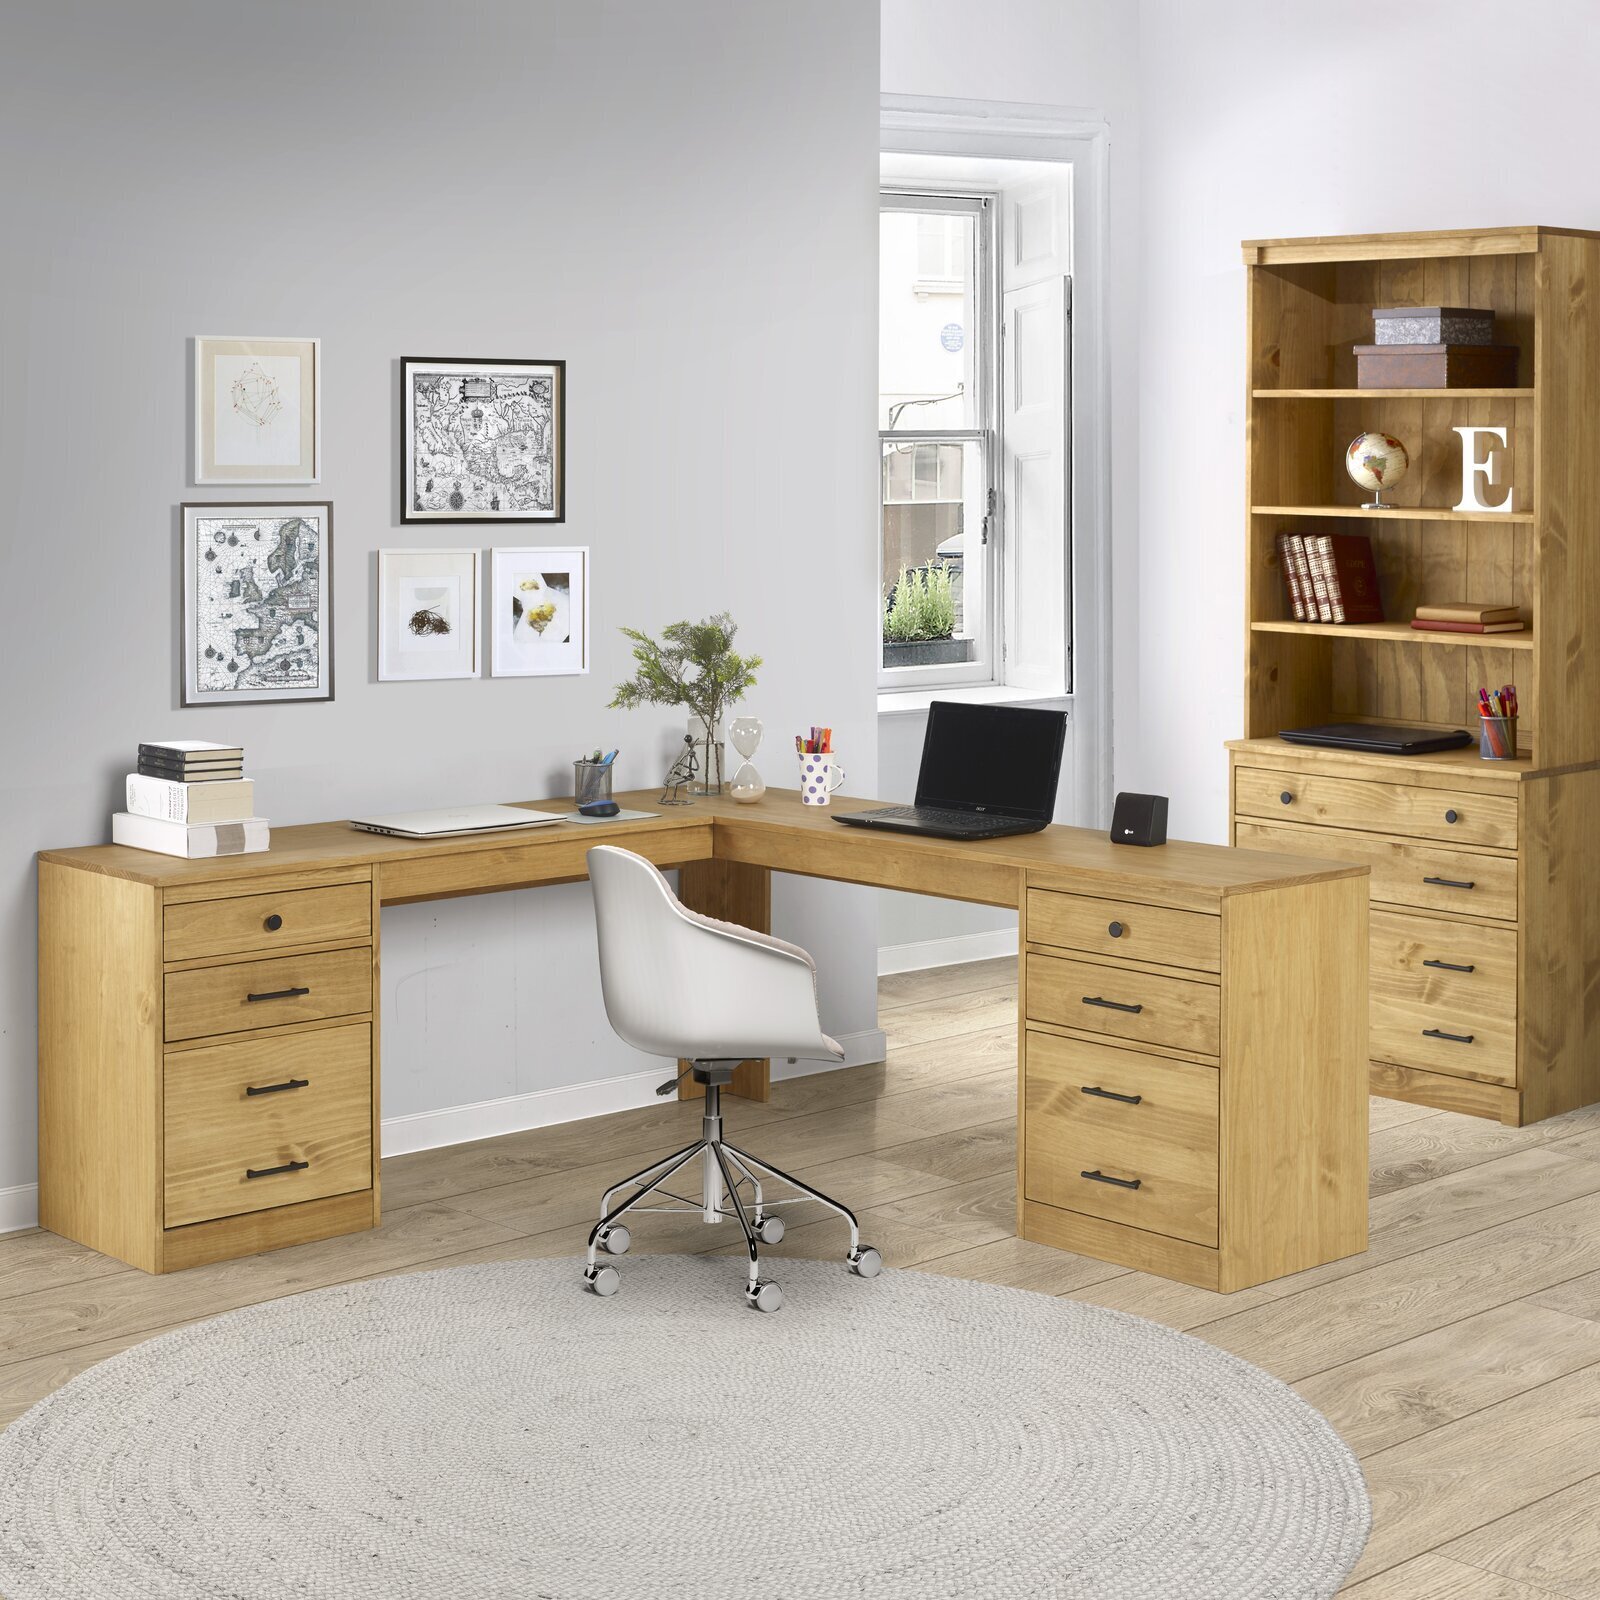 All wooden modern L shaped desk